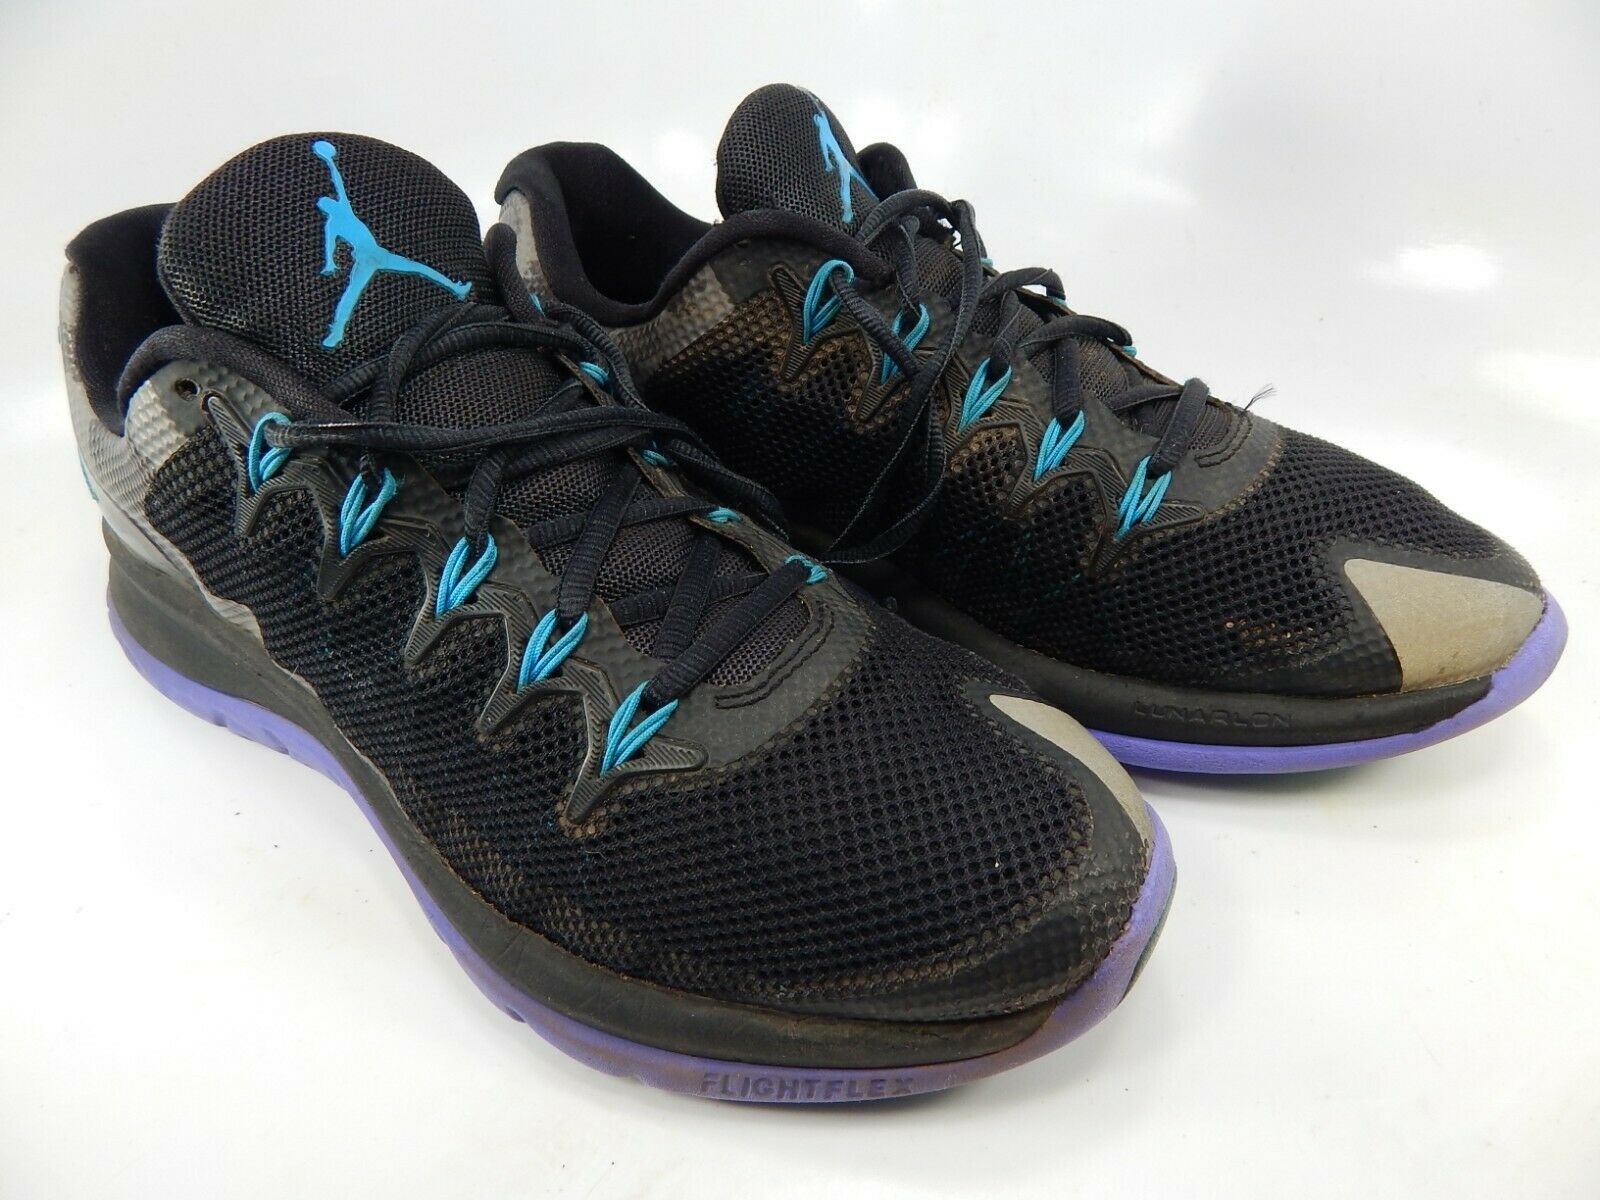 Nike Jordan Flight Runner 2 Size US 8 M (D) EU 41 Men's Running Shoes 715572-007 - $50.26